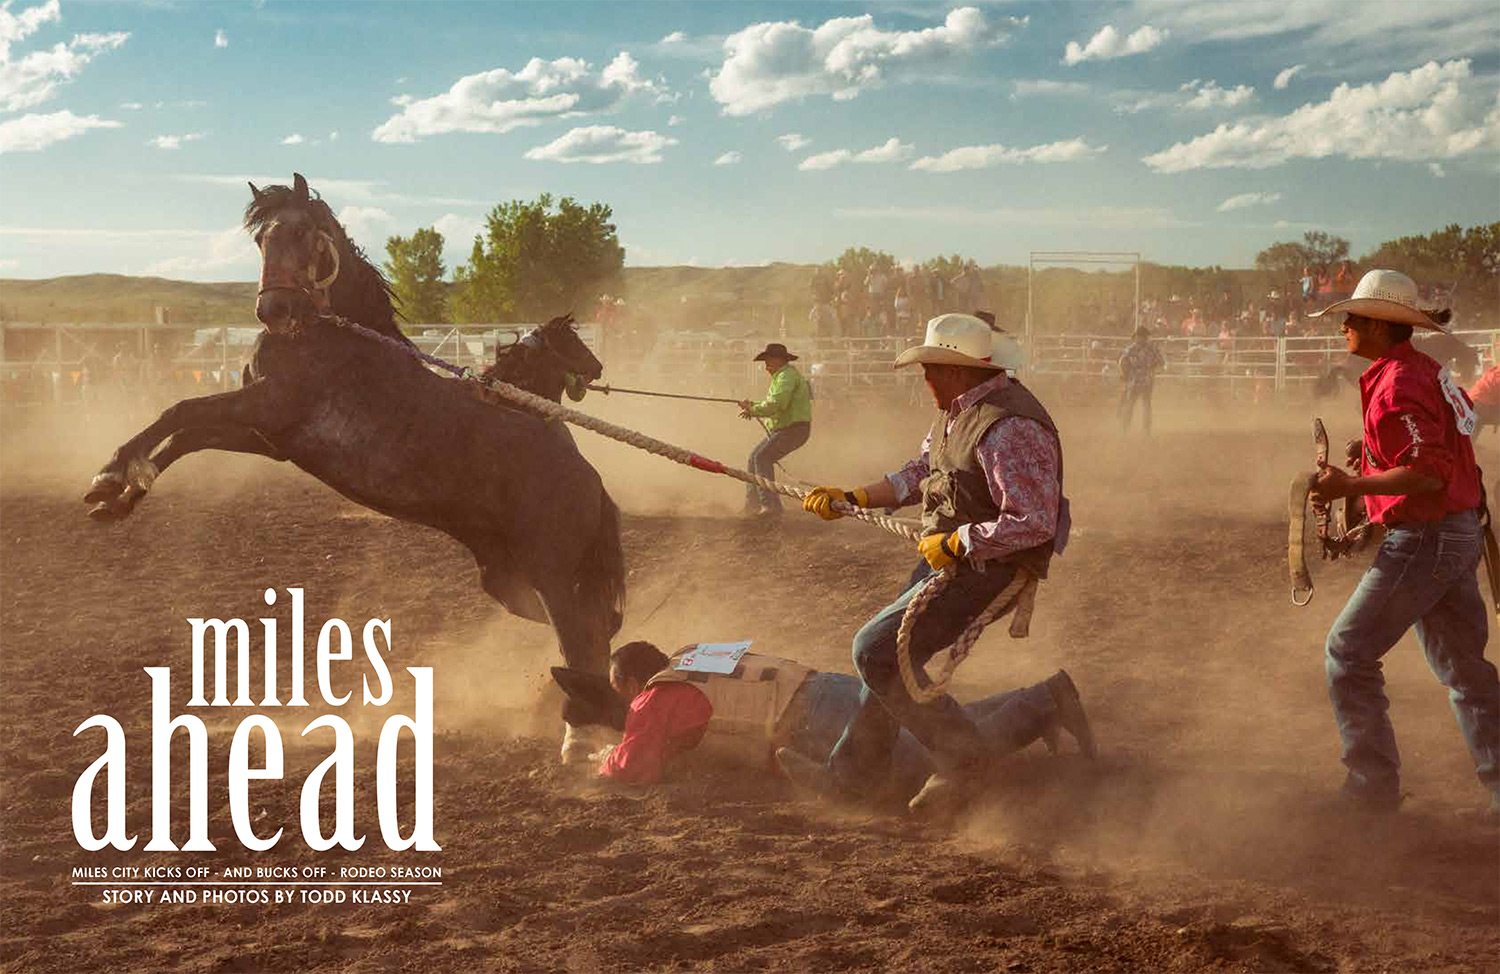 Montana-Magazine-Photos-of-Rodeo-Photos-by-Todd-Klassy-01.jpg